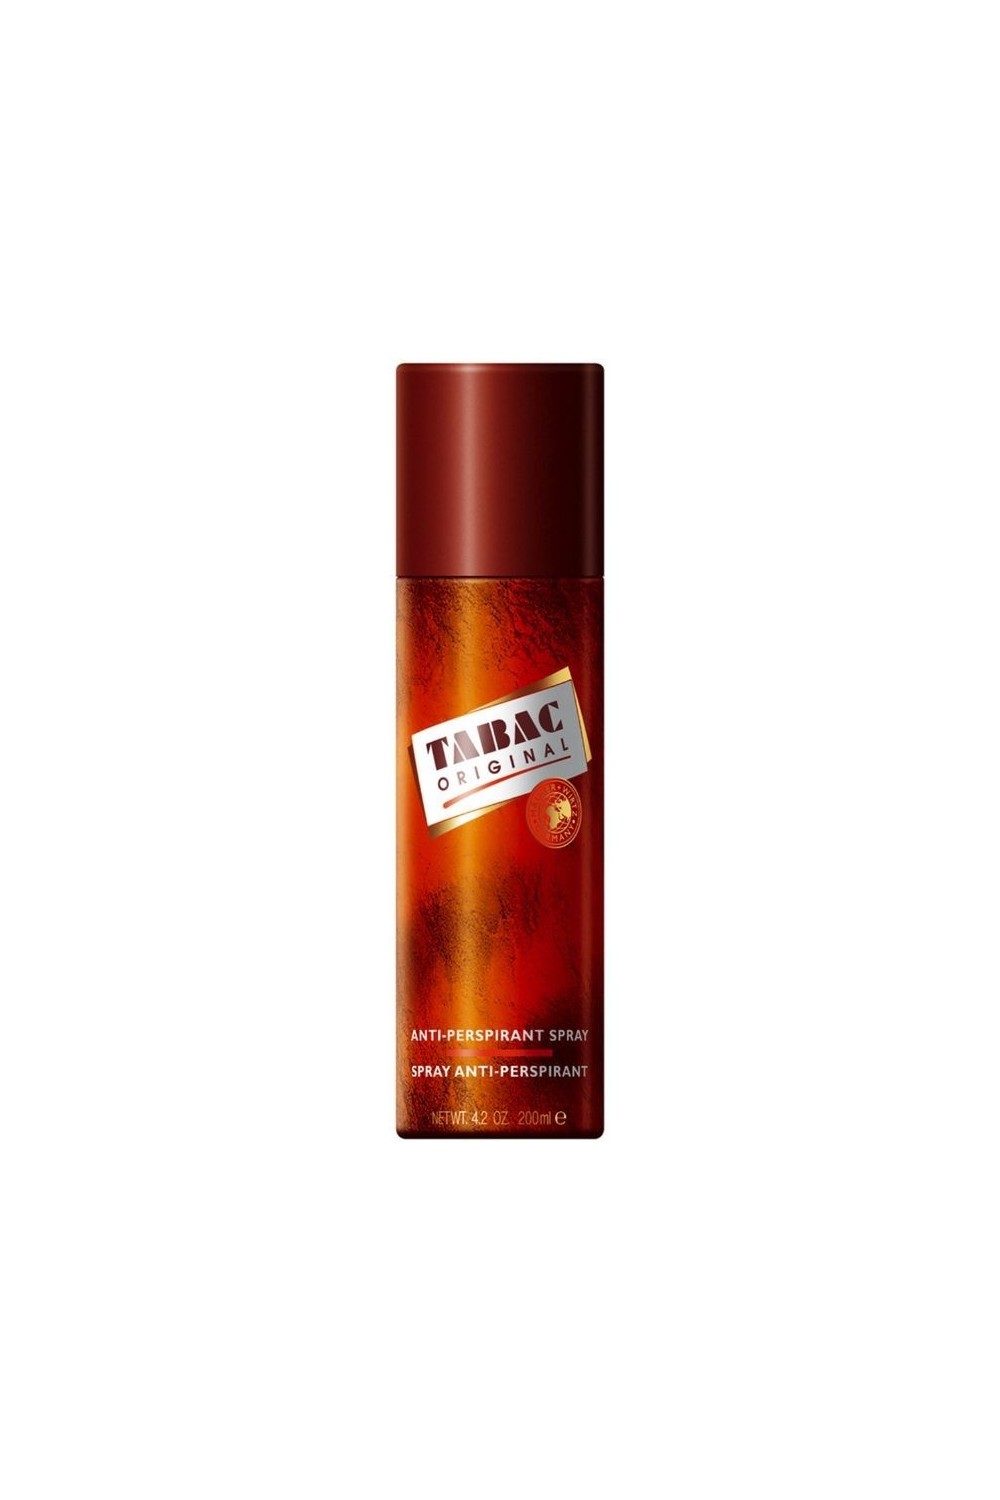 Tabac Original Anti Perspirant Deodorant Spray 200ml